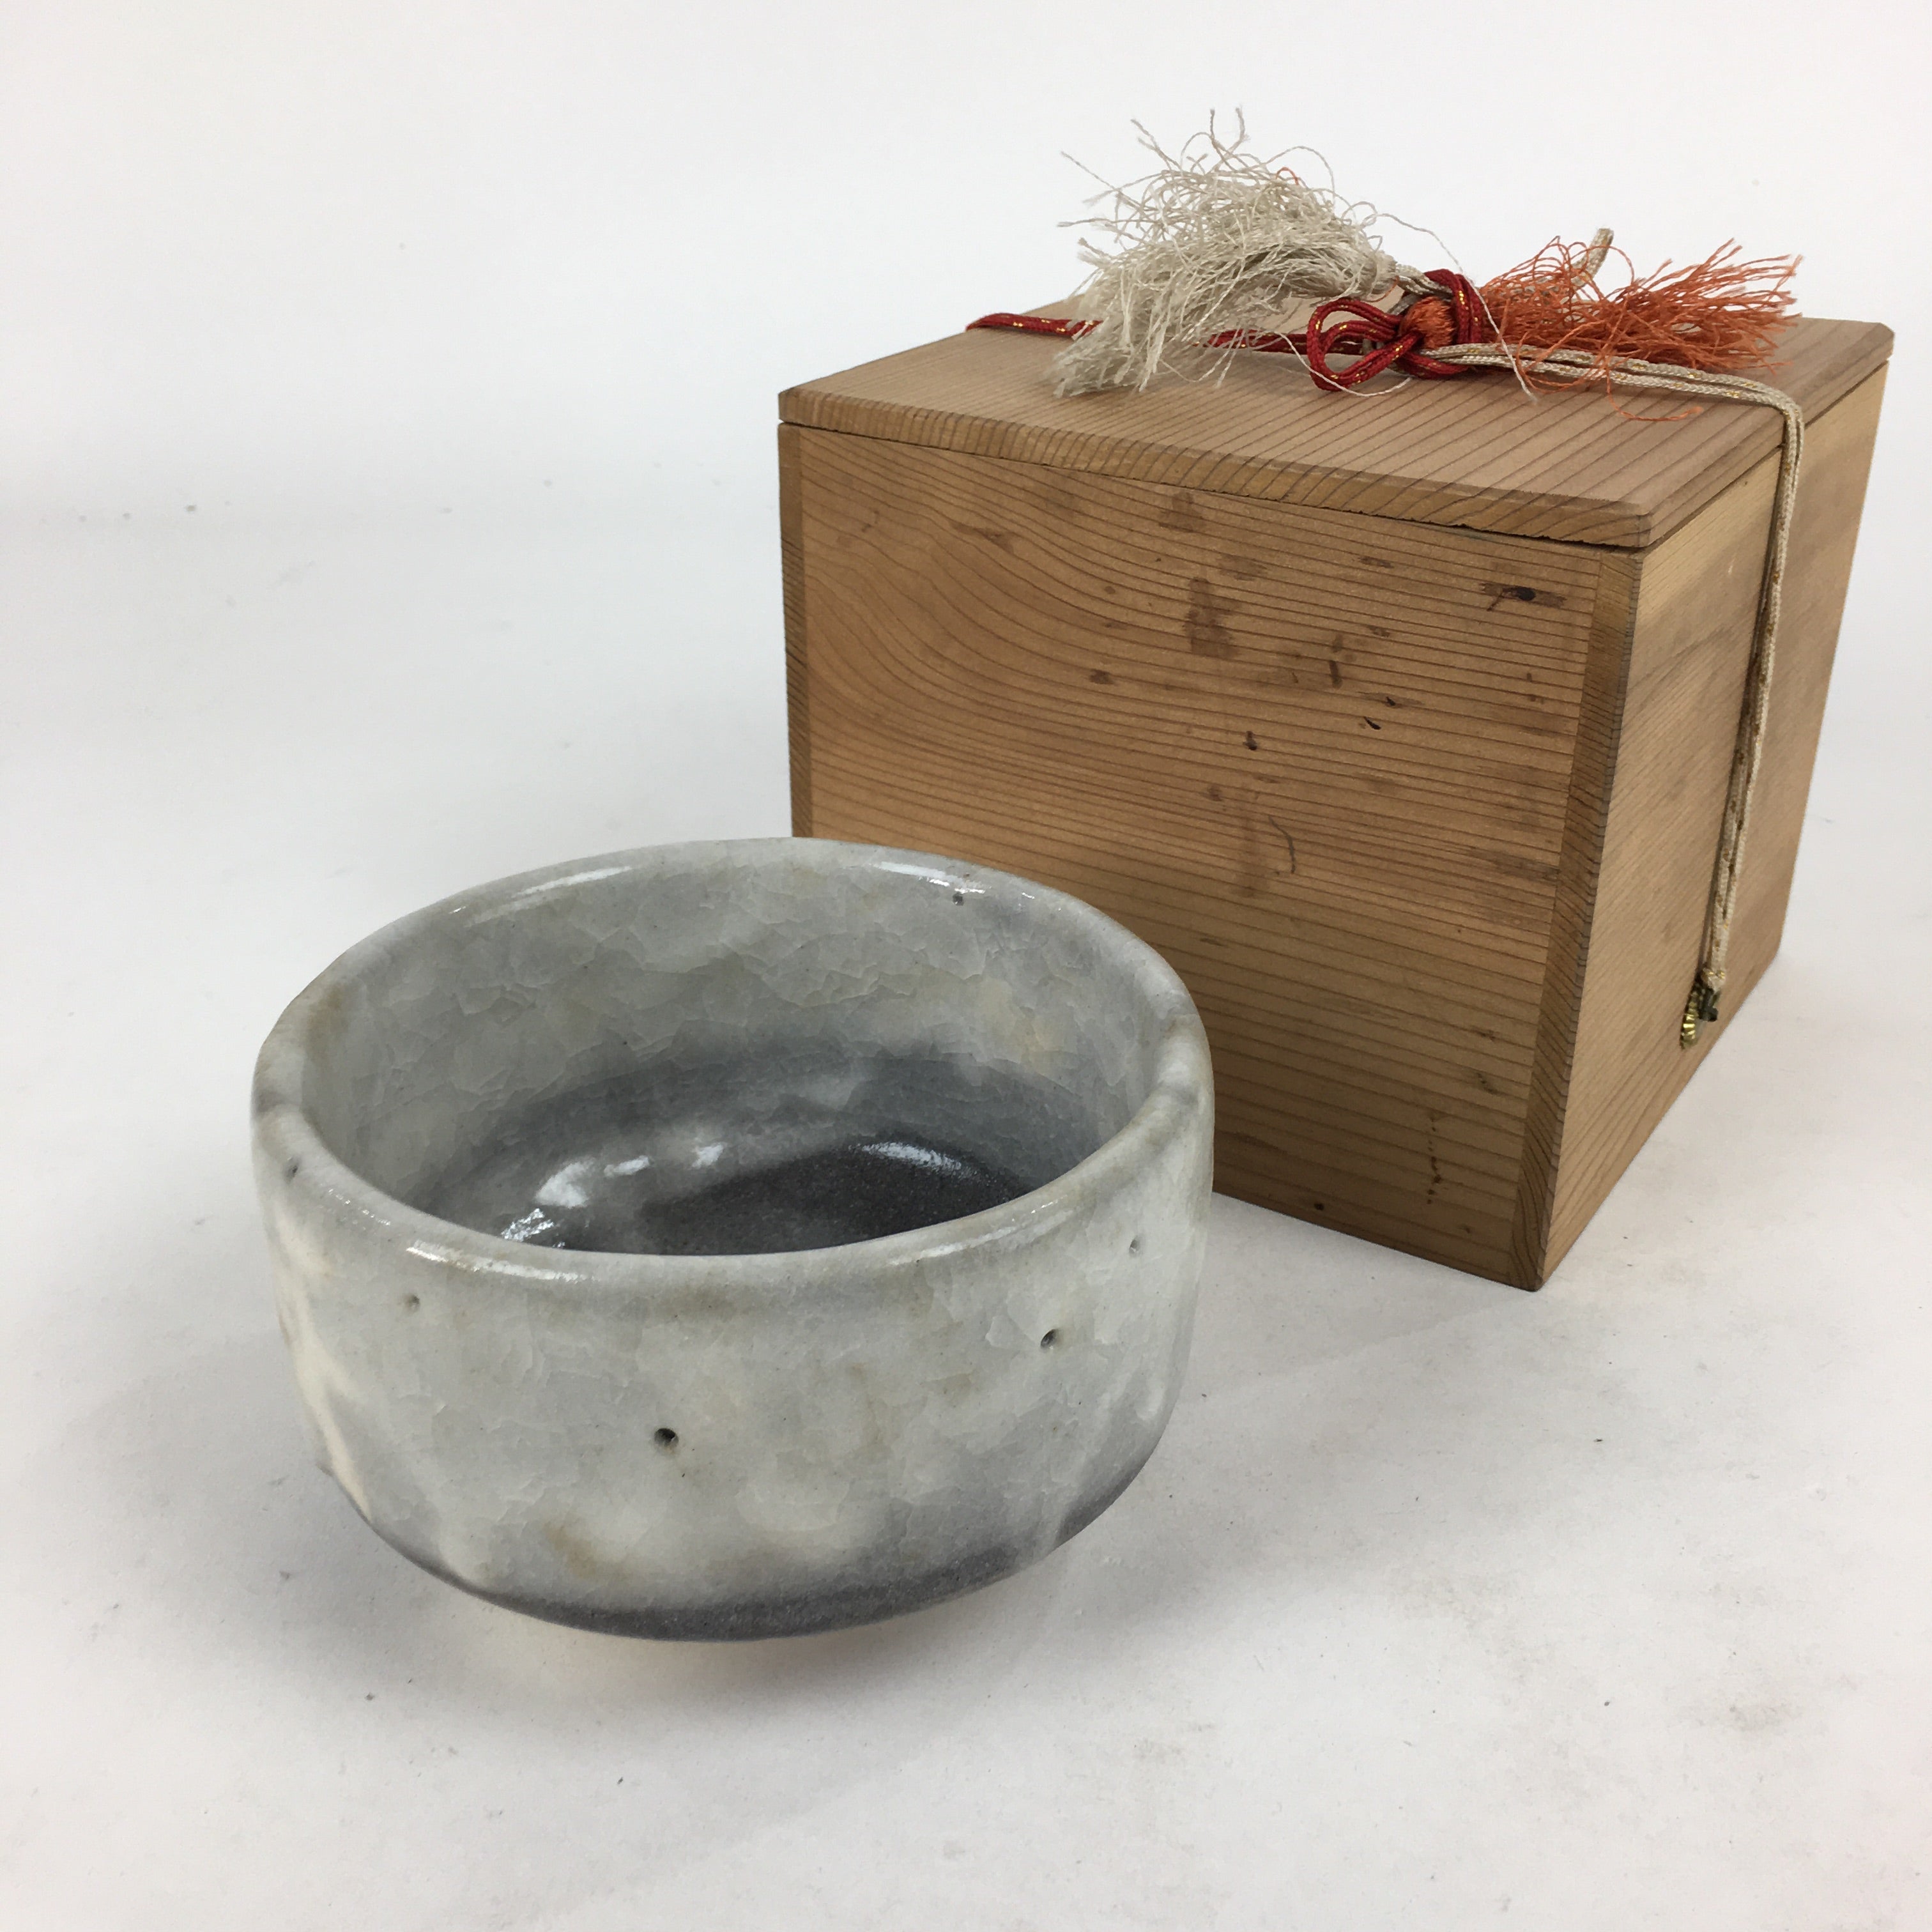 Japanese Mino Ware Ceramic Green Tea Bowl Vtg Chawan Boxed Pottery PX601